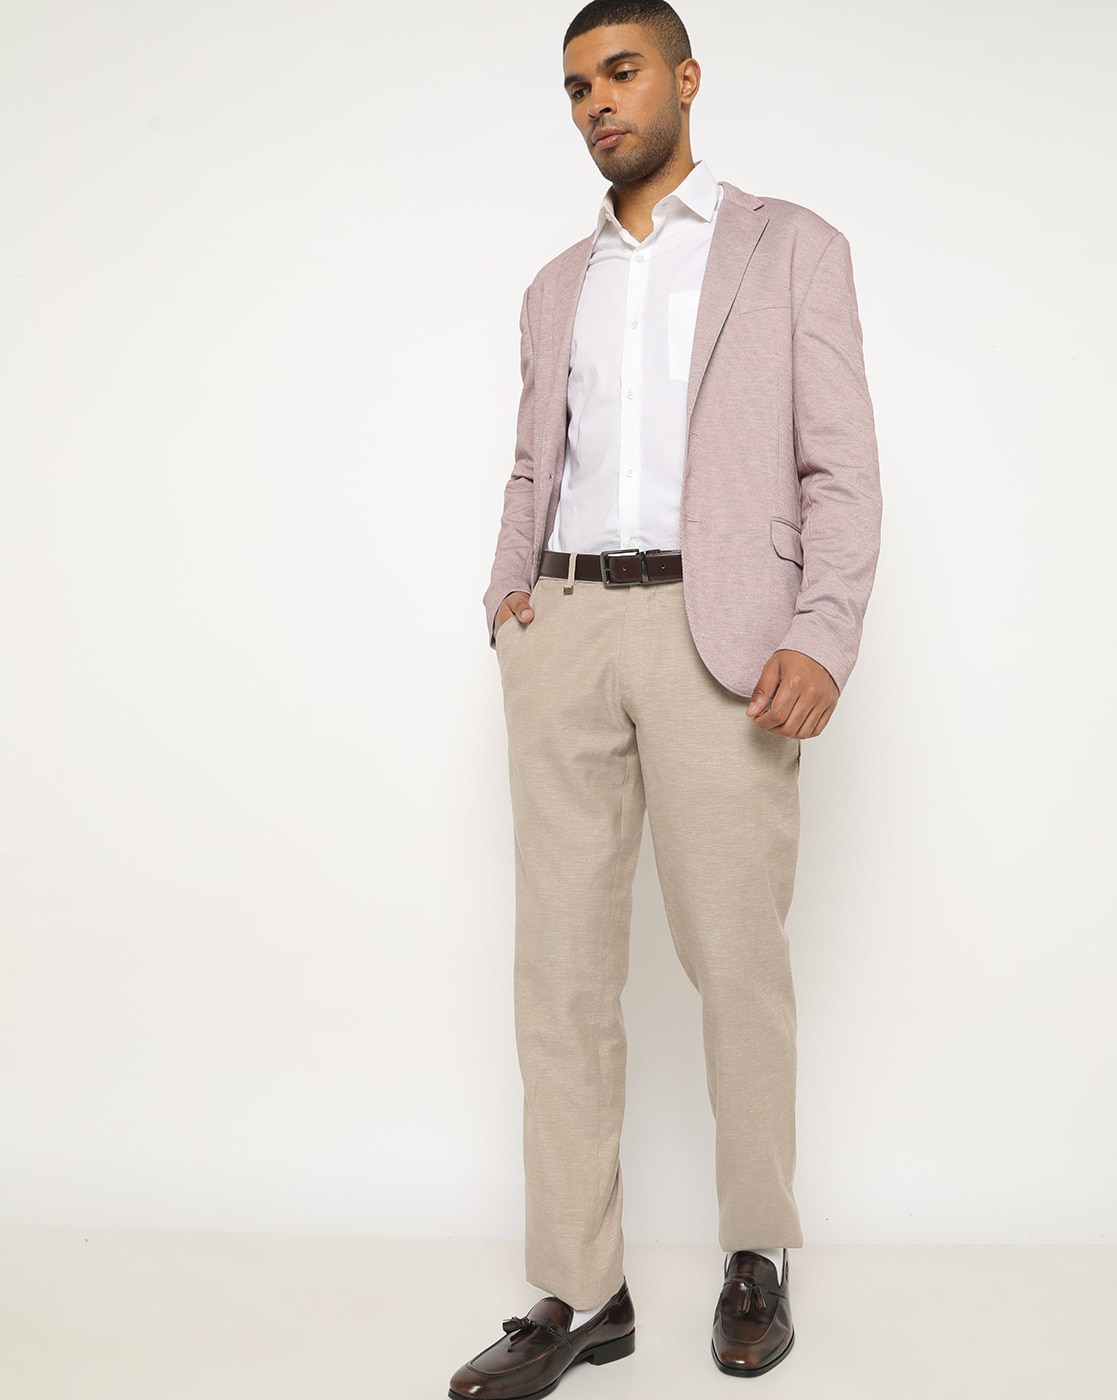 Van Heusen Pink Self Designed Formal Shirt 8053517htm  Buy Van Heusen Pink  Self Designed Formal Shirt 8053517htm online in India